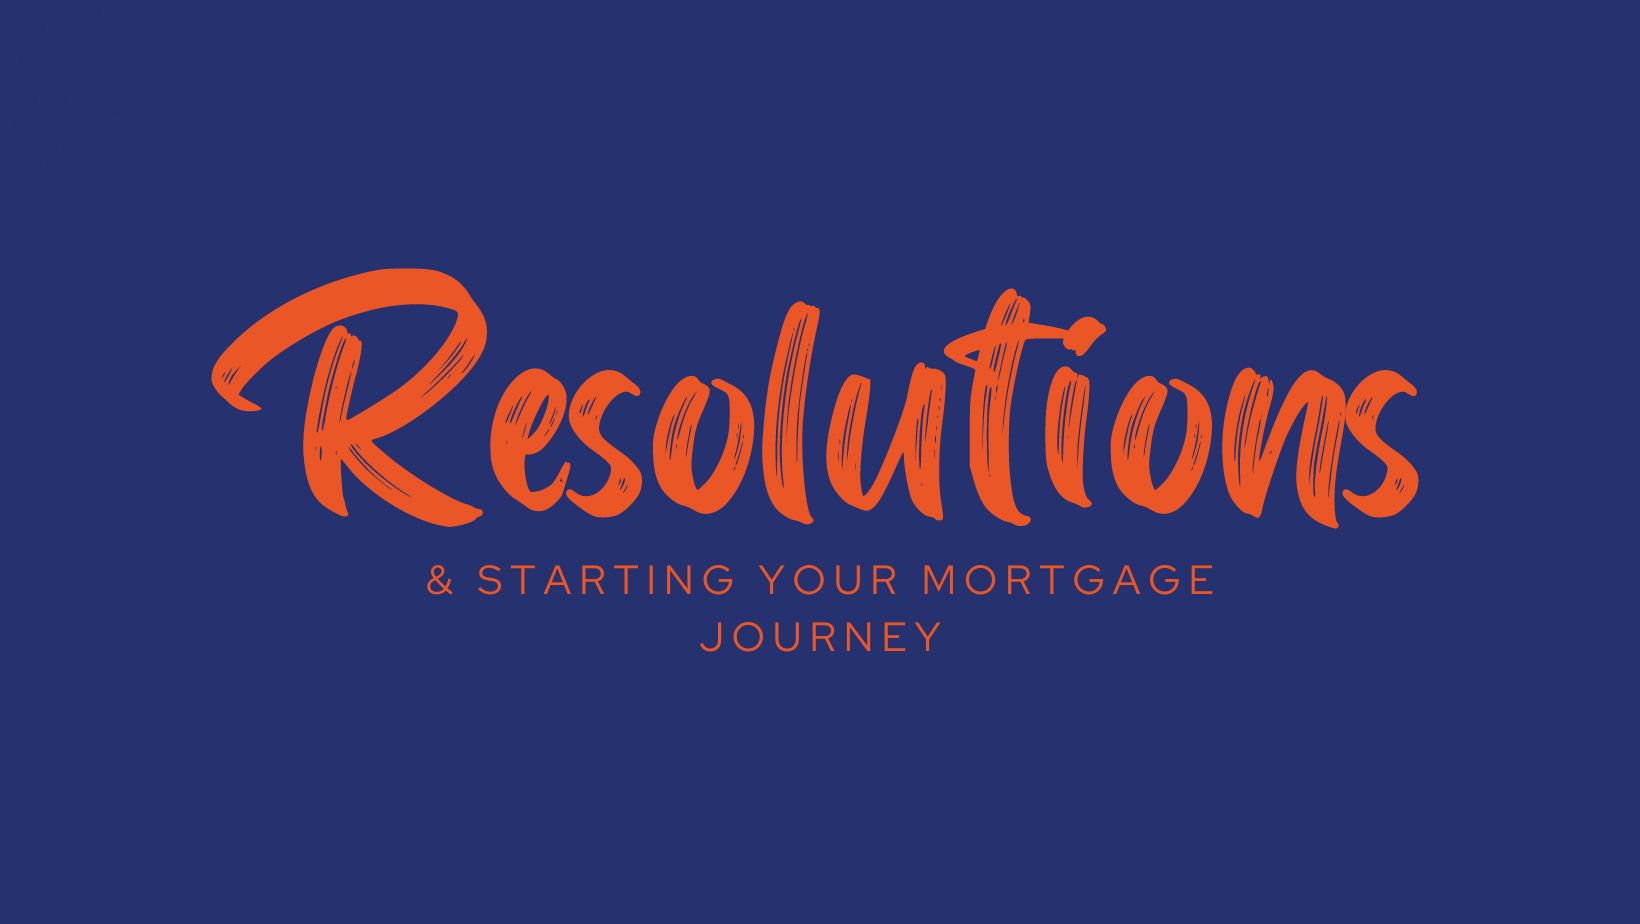 Mortgage Resolutions